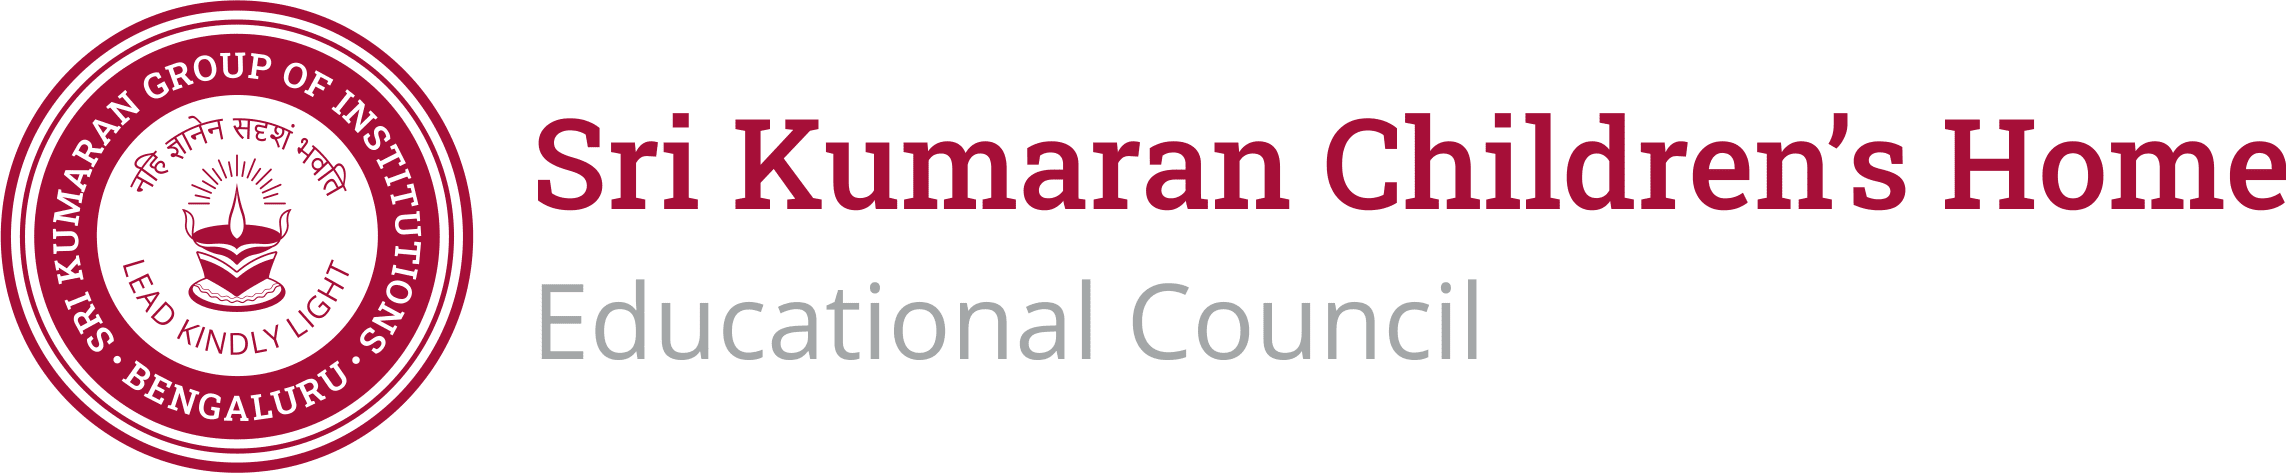 Sri Kumaran Children's Home | Educational Council